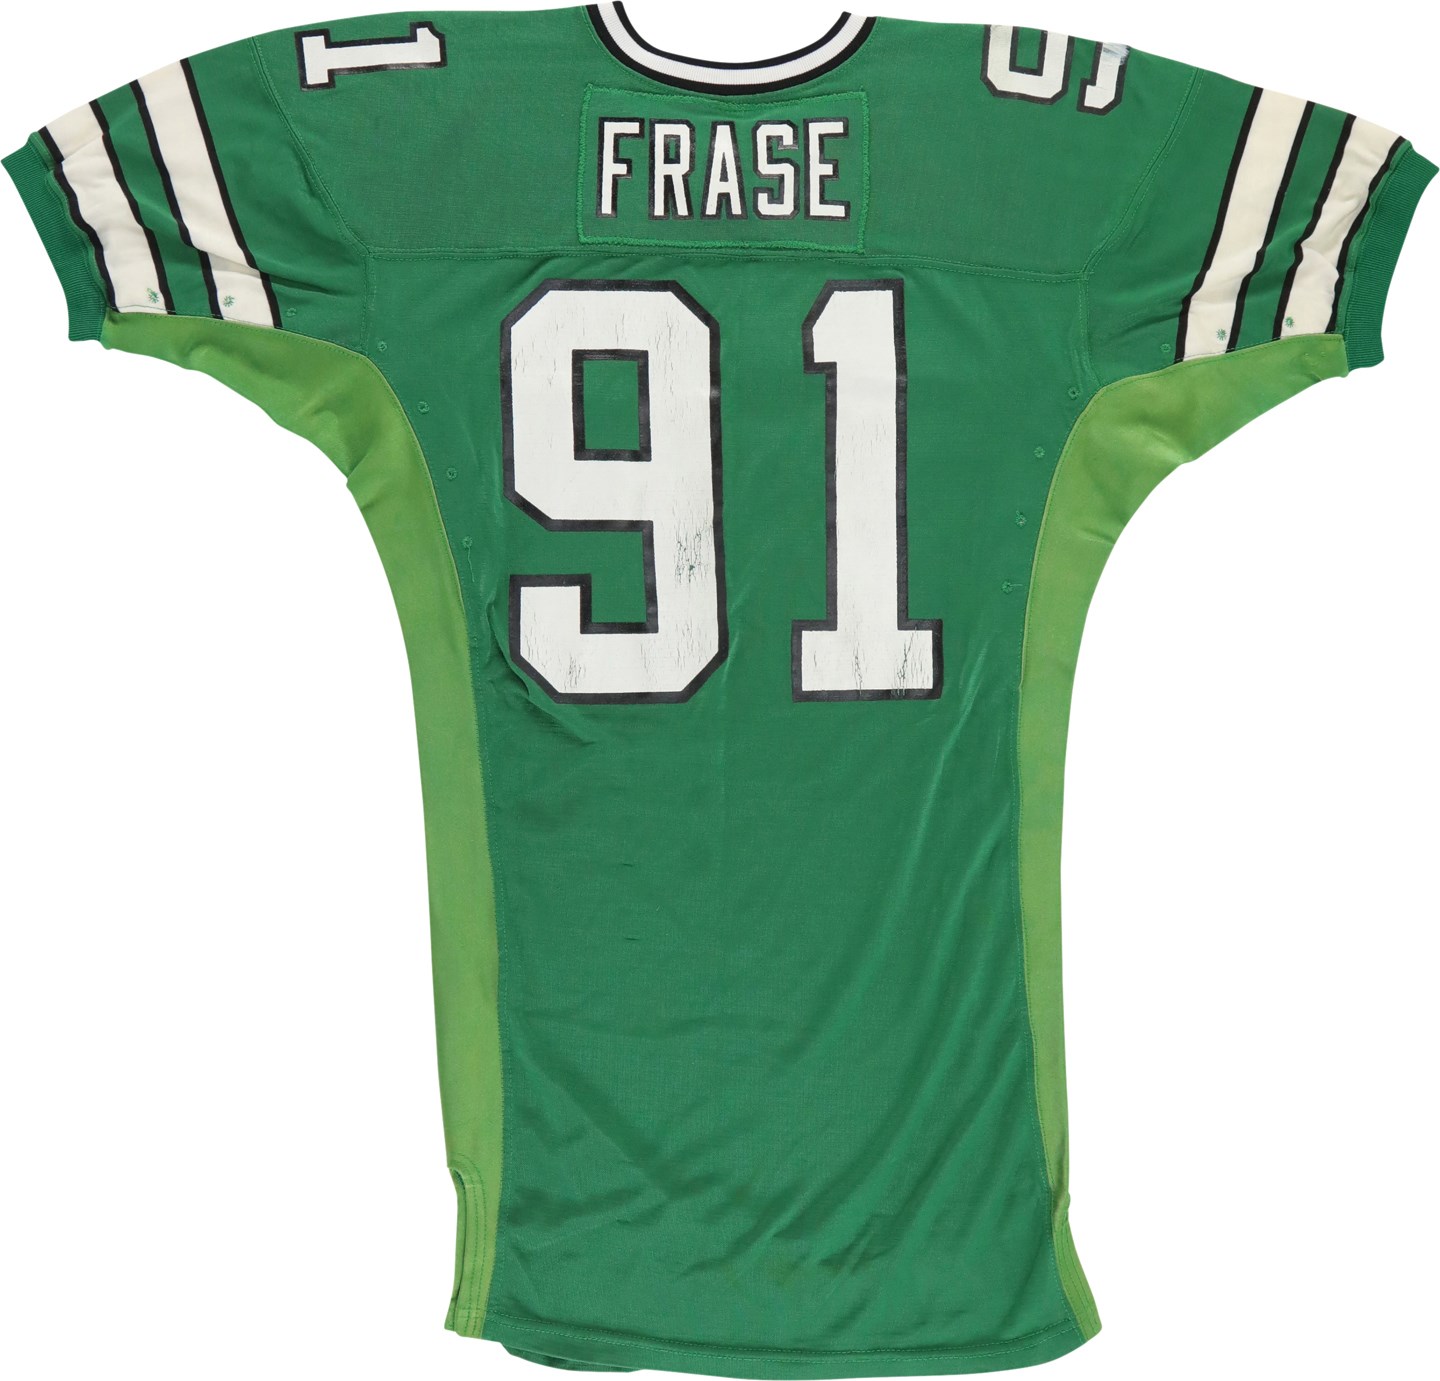 Circa 1990 Paul Frase New York Jets Game Worn Jersey